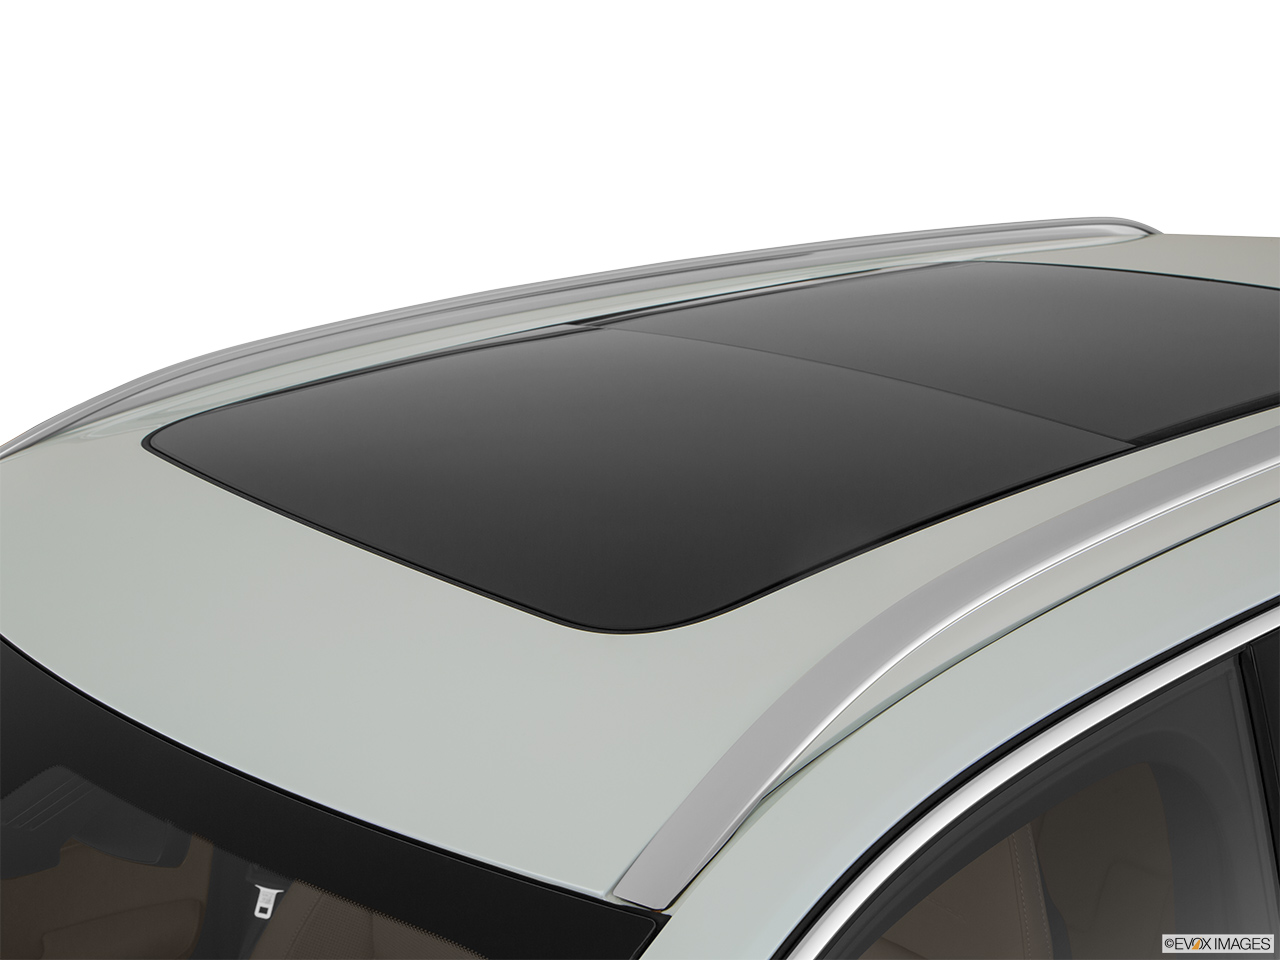 2018 Volvo XC90 T8 Inscription eAWD Plug-in Hybrid Sunroof/moonroof. 